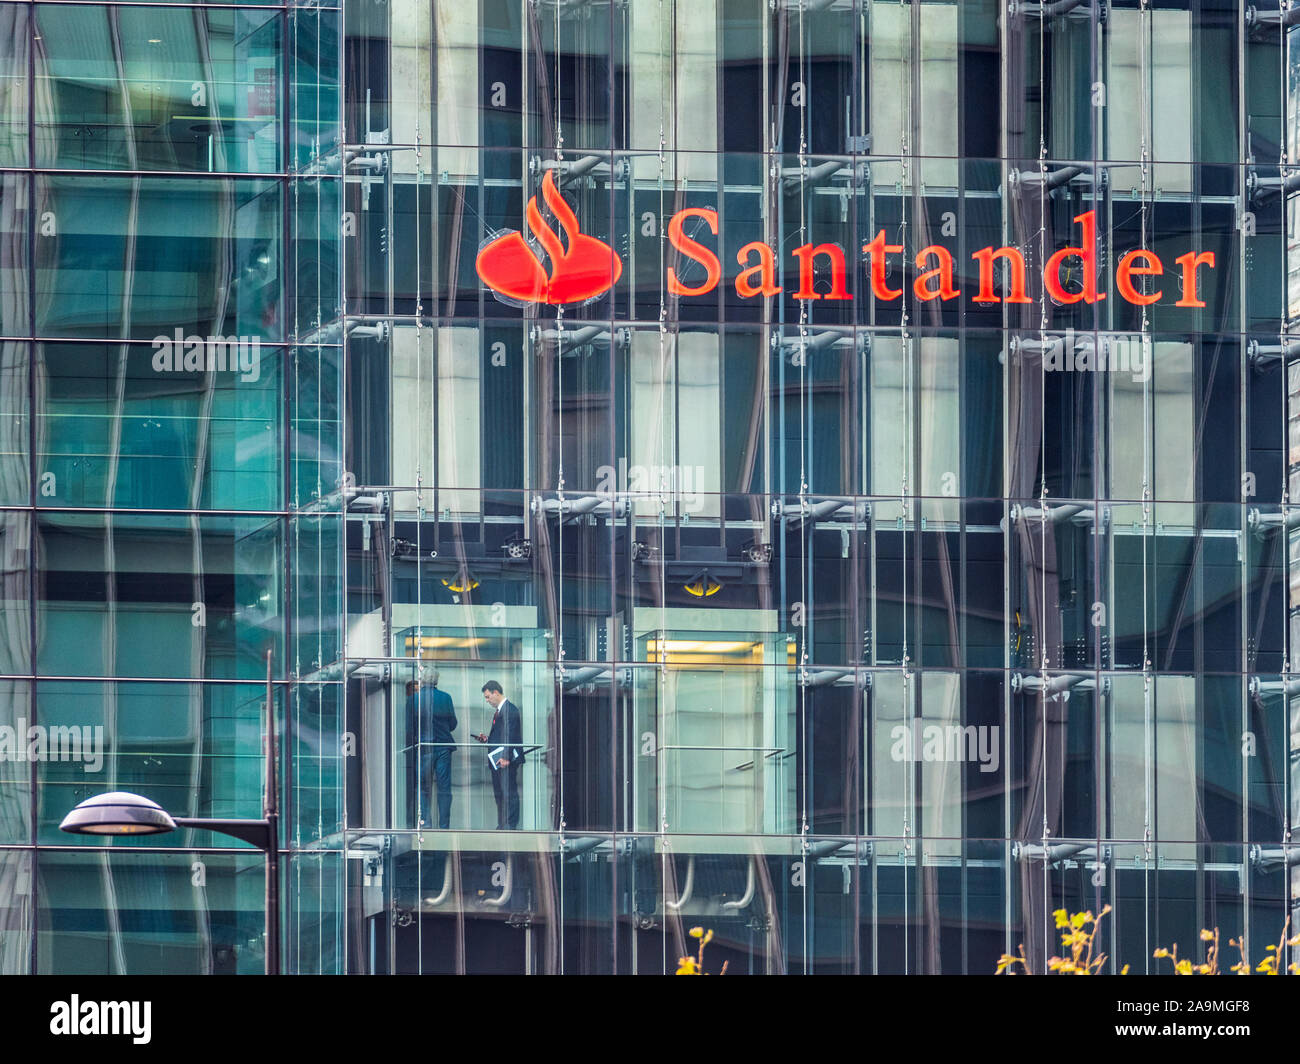 Santander London, Santander UK head office in Triton Square, Central London Stock Photo